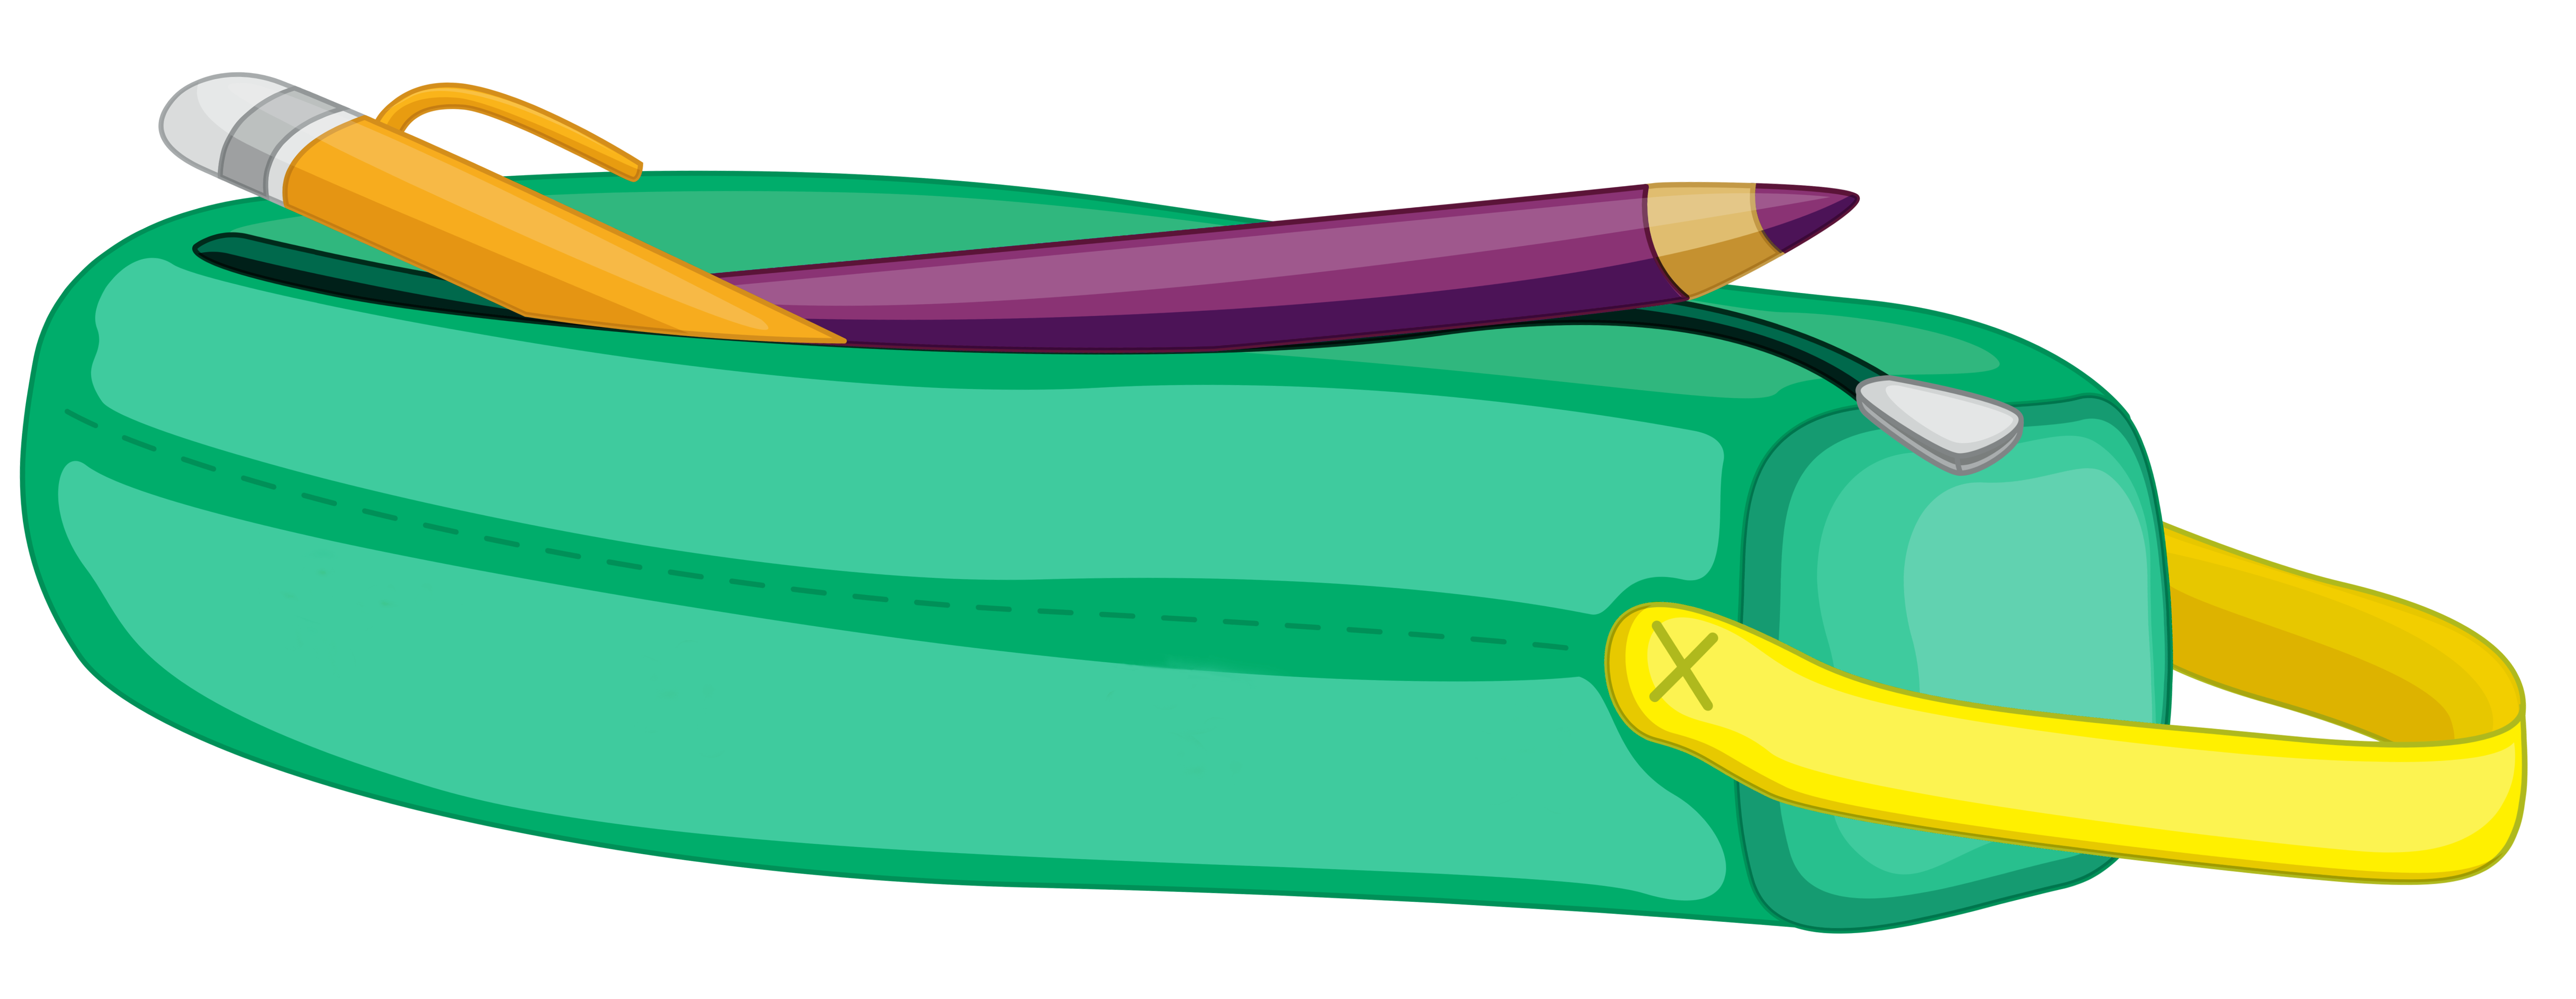 pencil bag logo